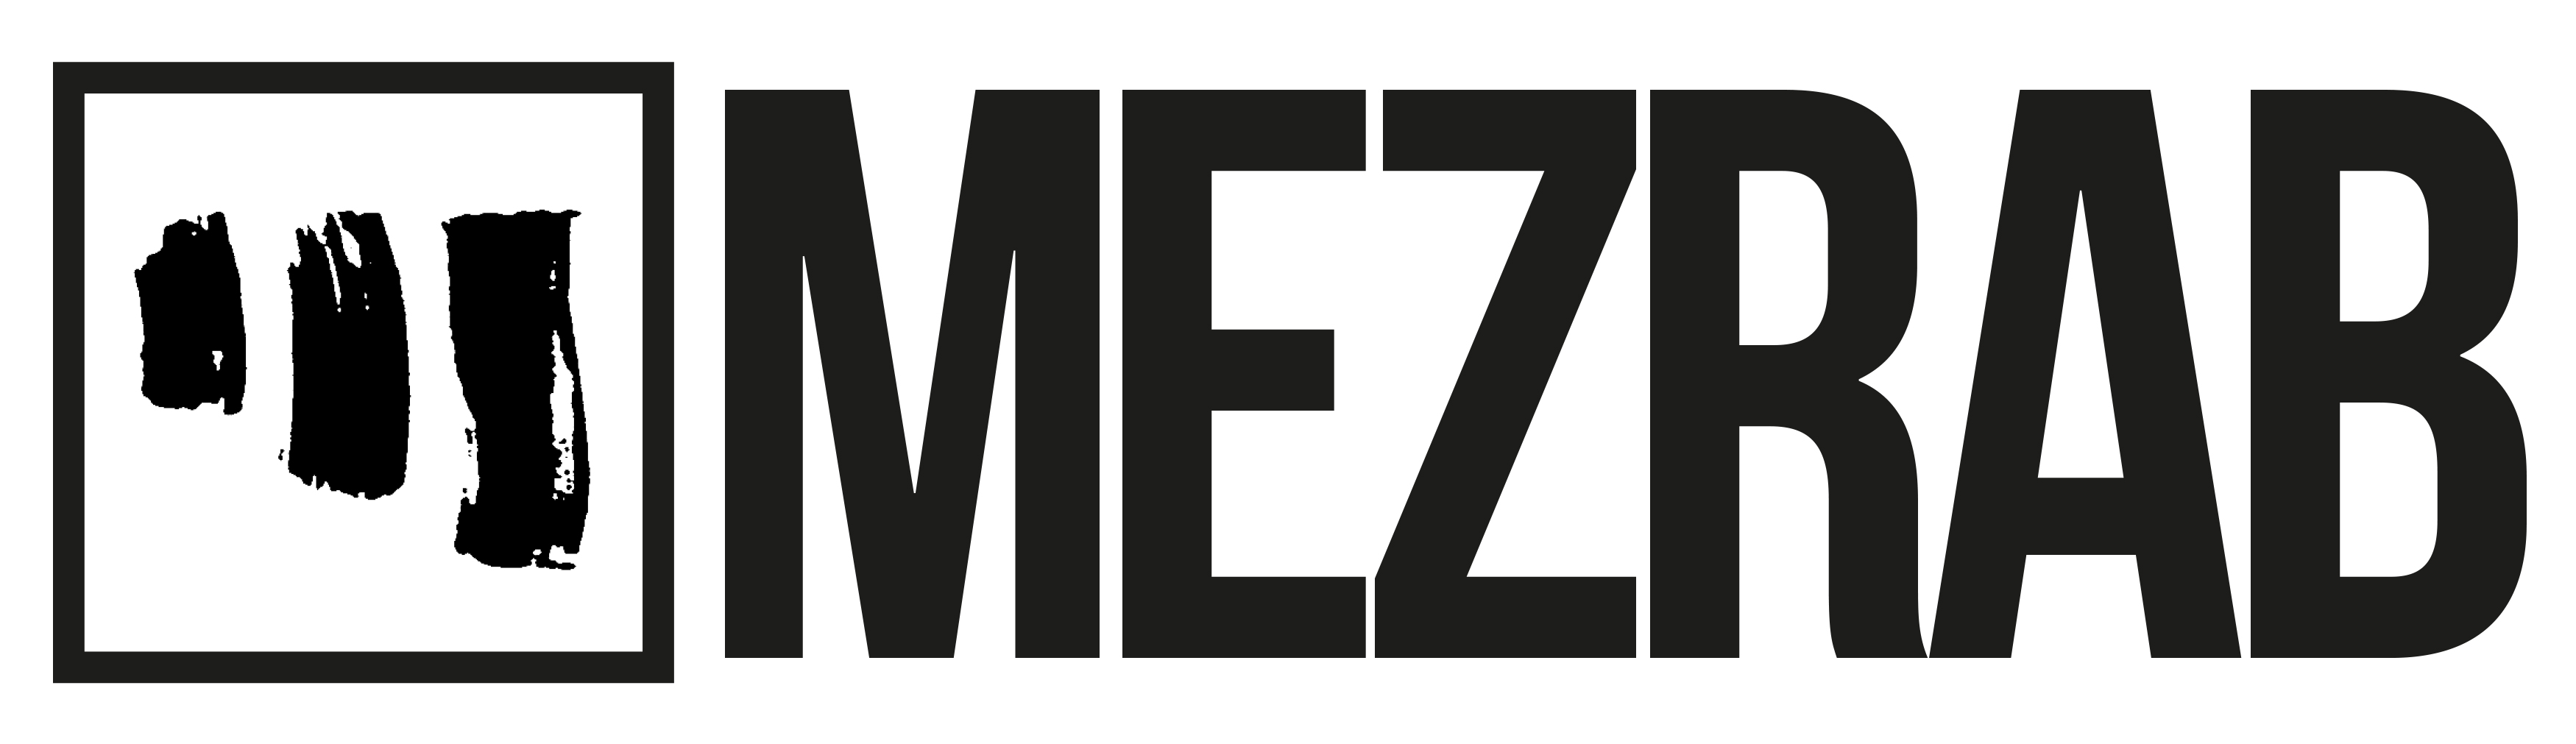 Mezrab Logo and text 3500